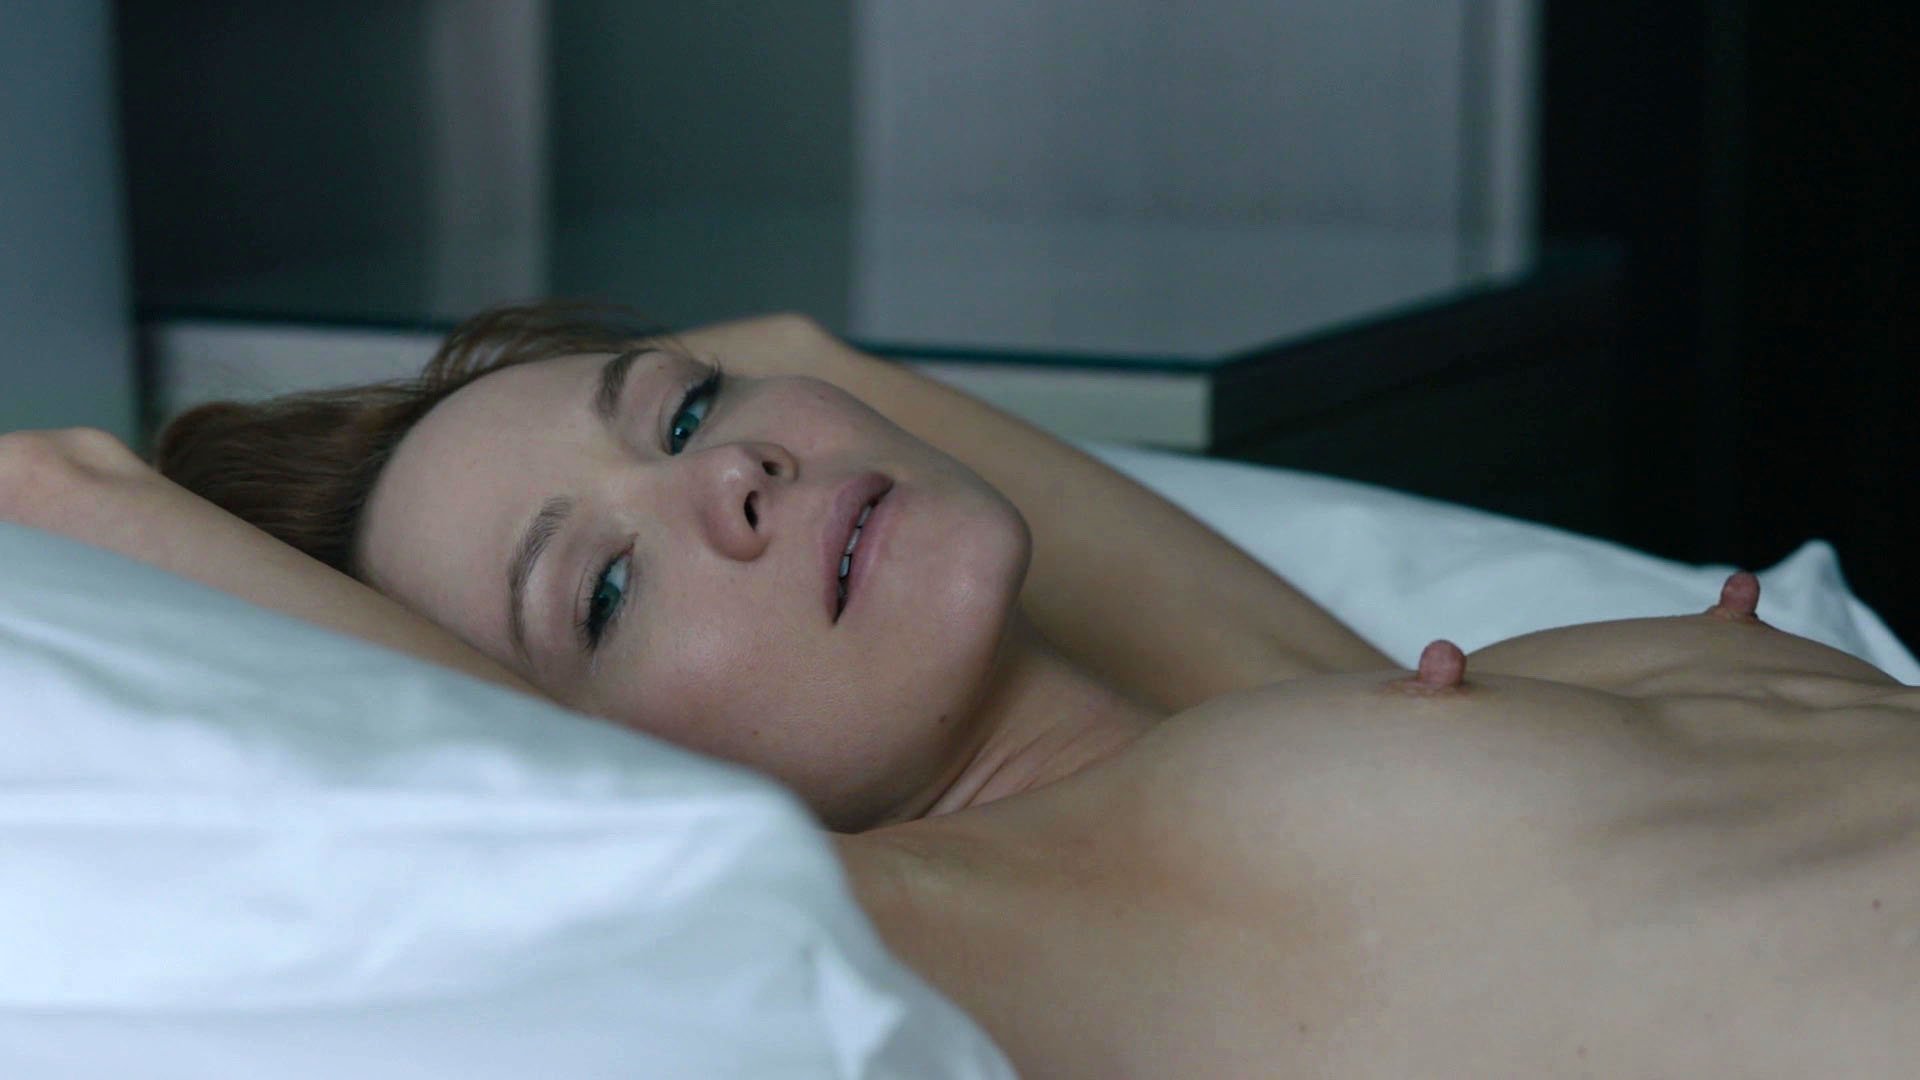 Nude Video Celebs Louisa Krause Nude Anna Friel Nude